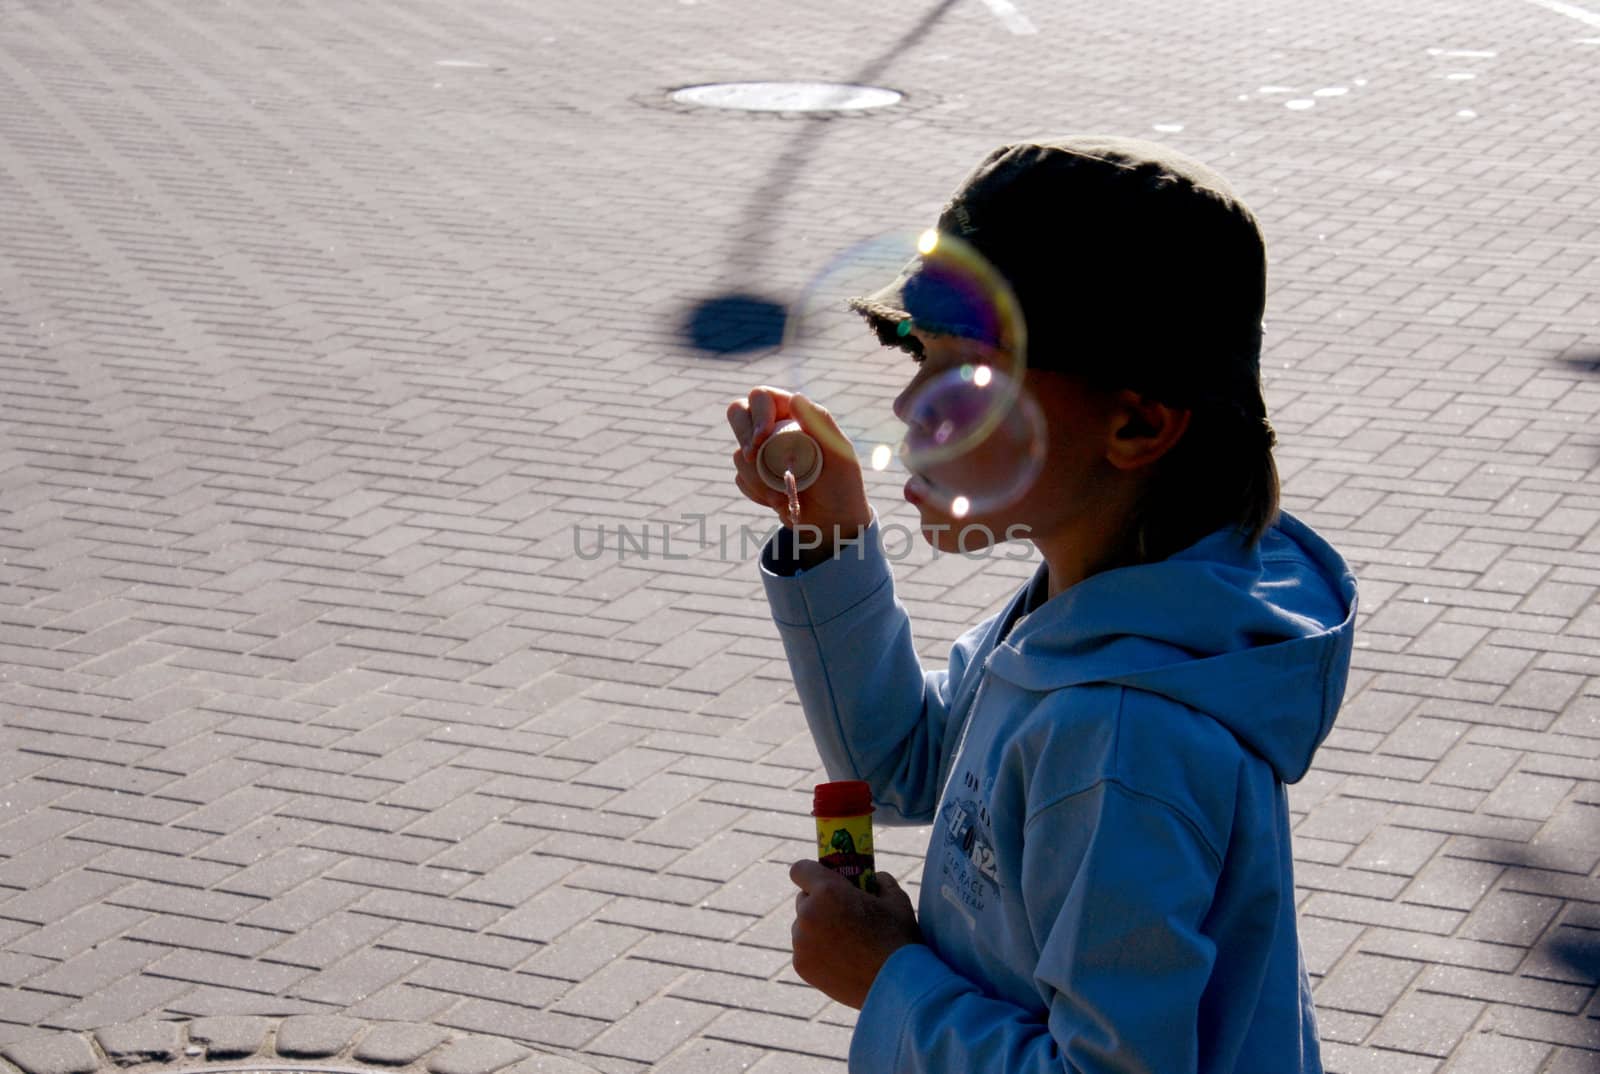 Kid blowing soap bubbles by sauletas